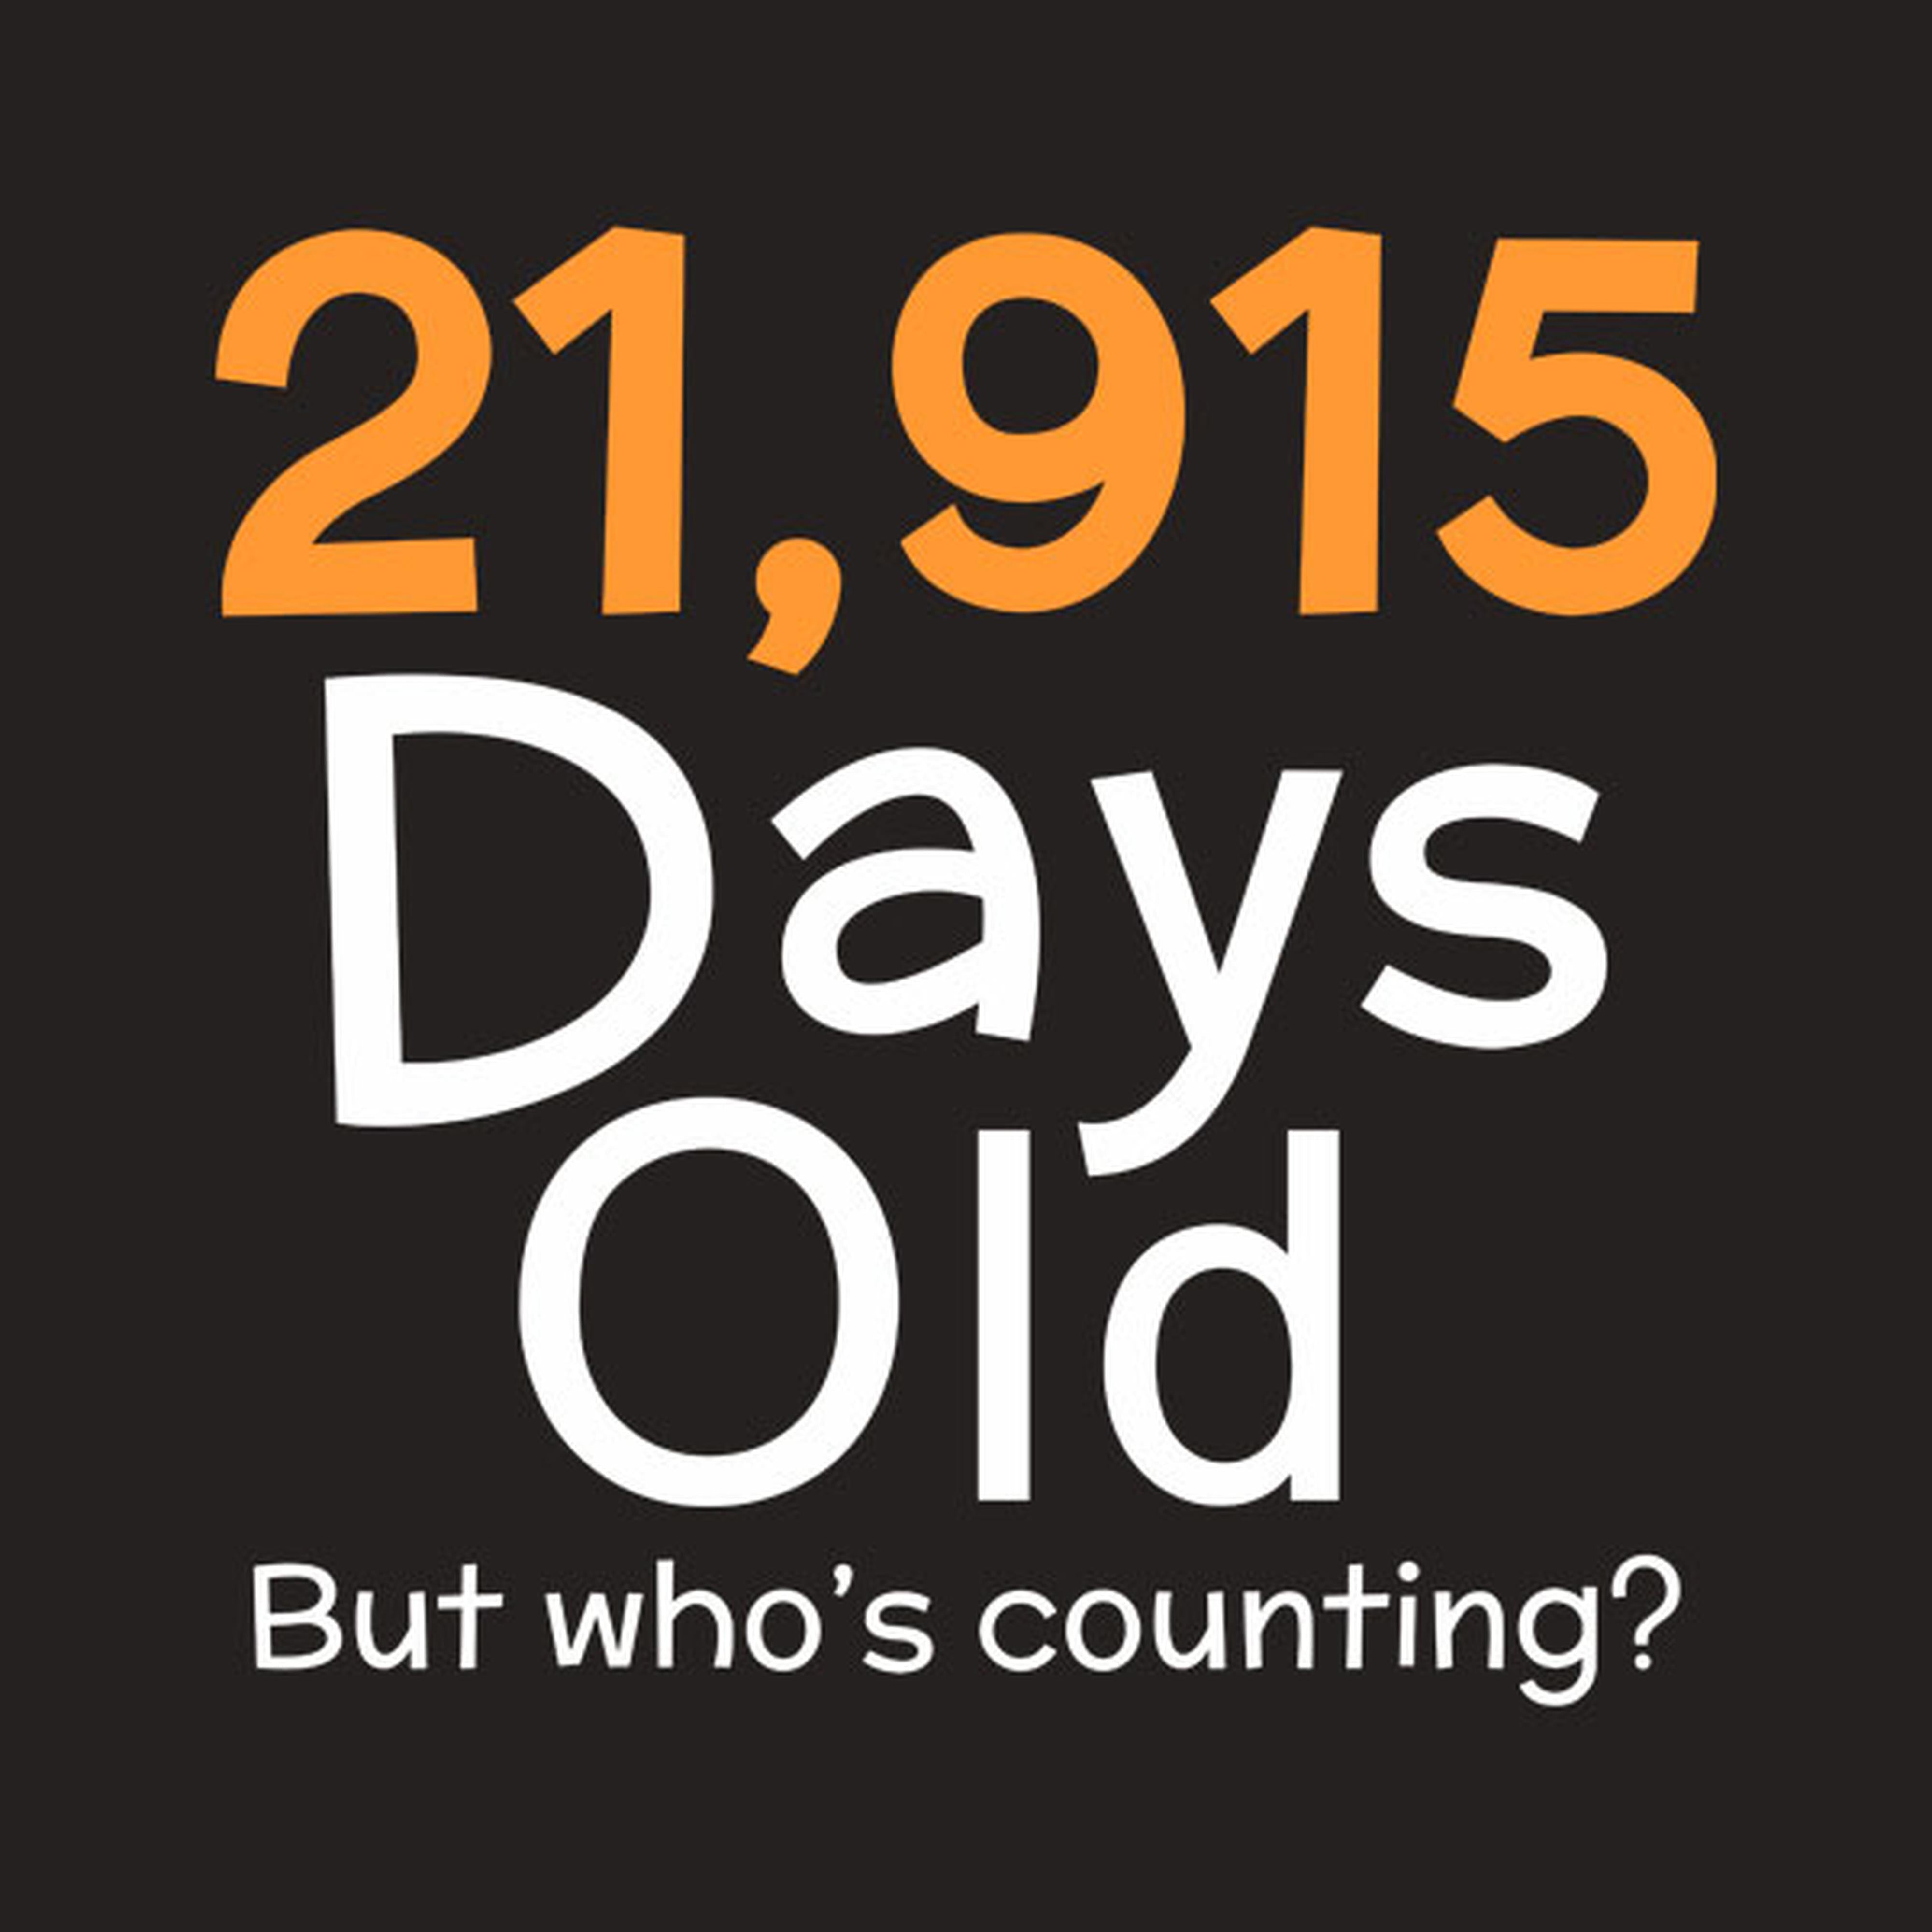 21,915 days old (60yo) - T-shirt